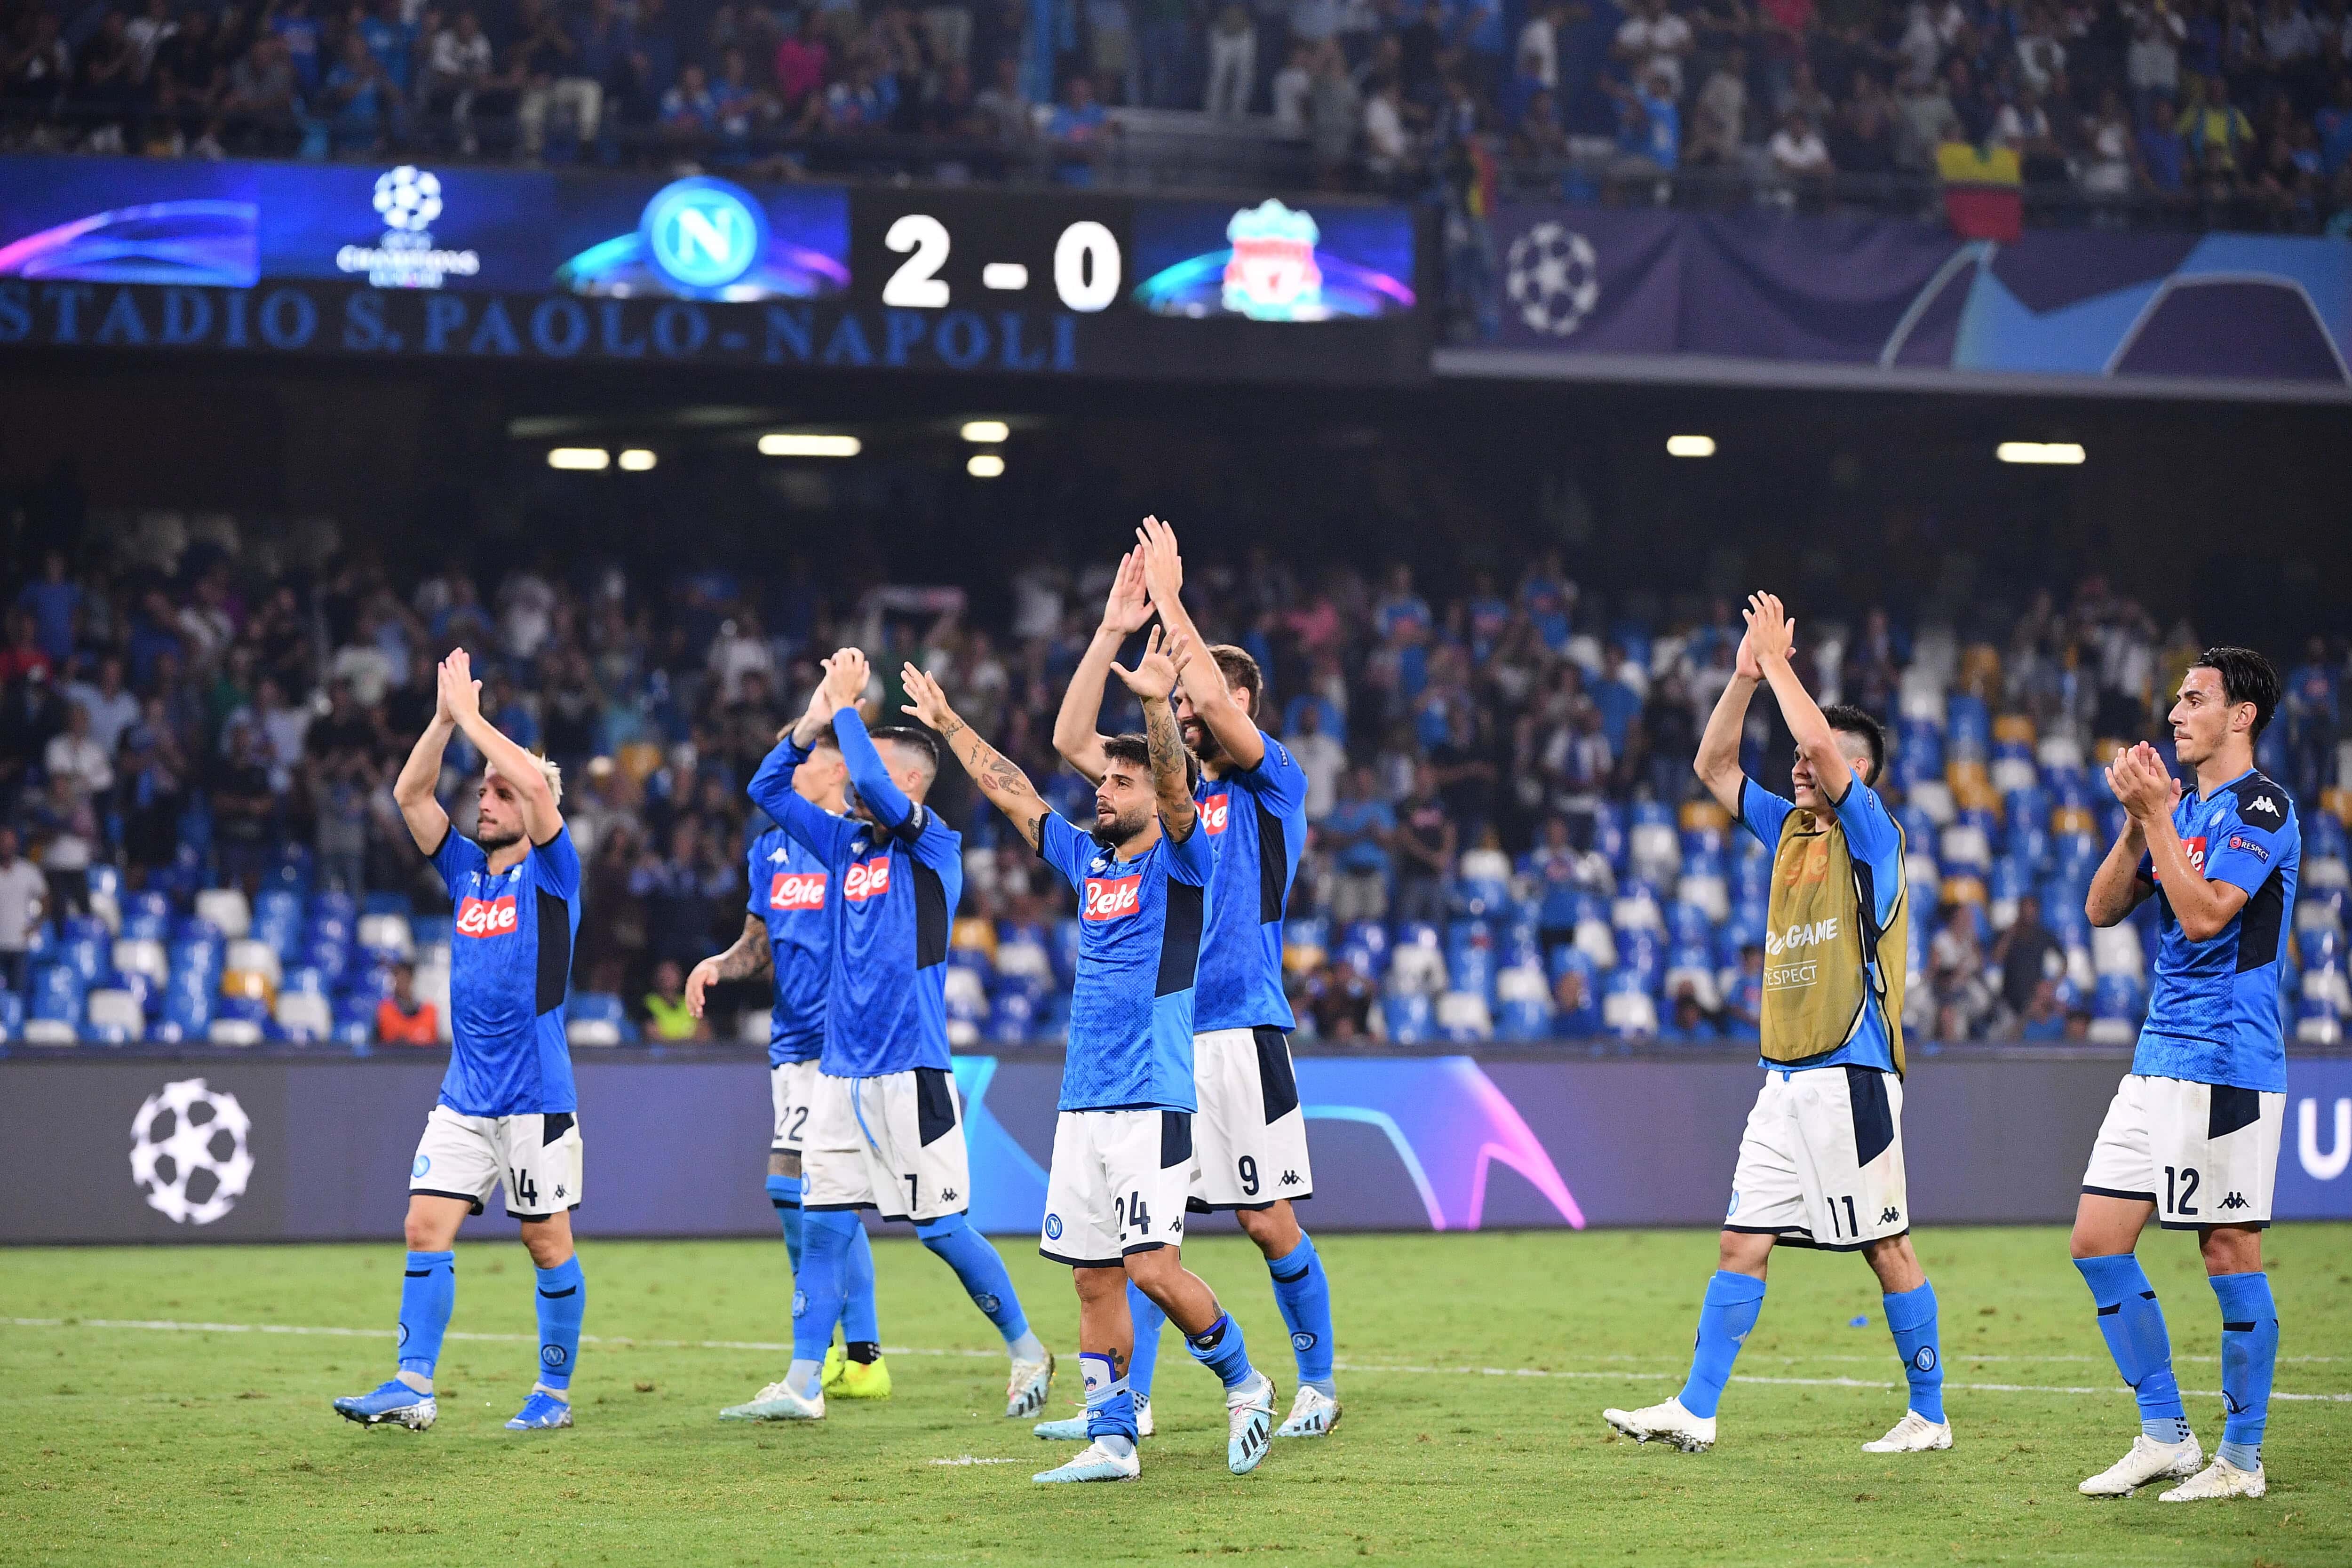 Napoli Champions / Where to Watch Barcelona vs Napoli Champions League